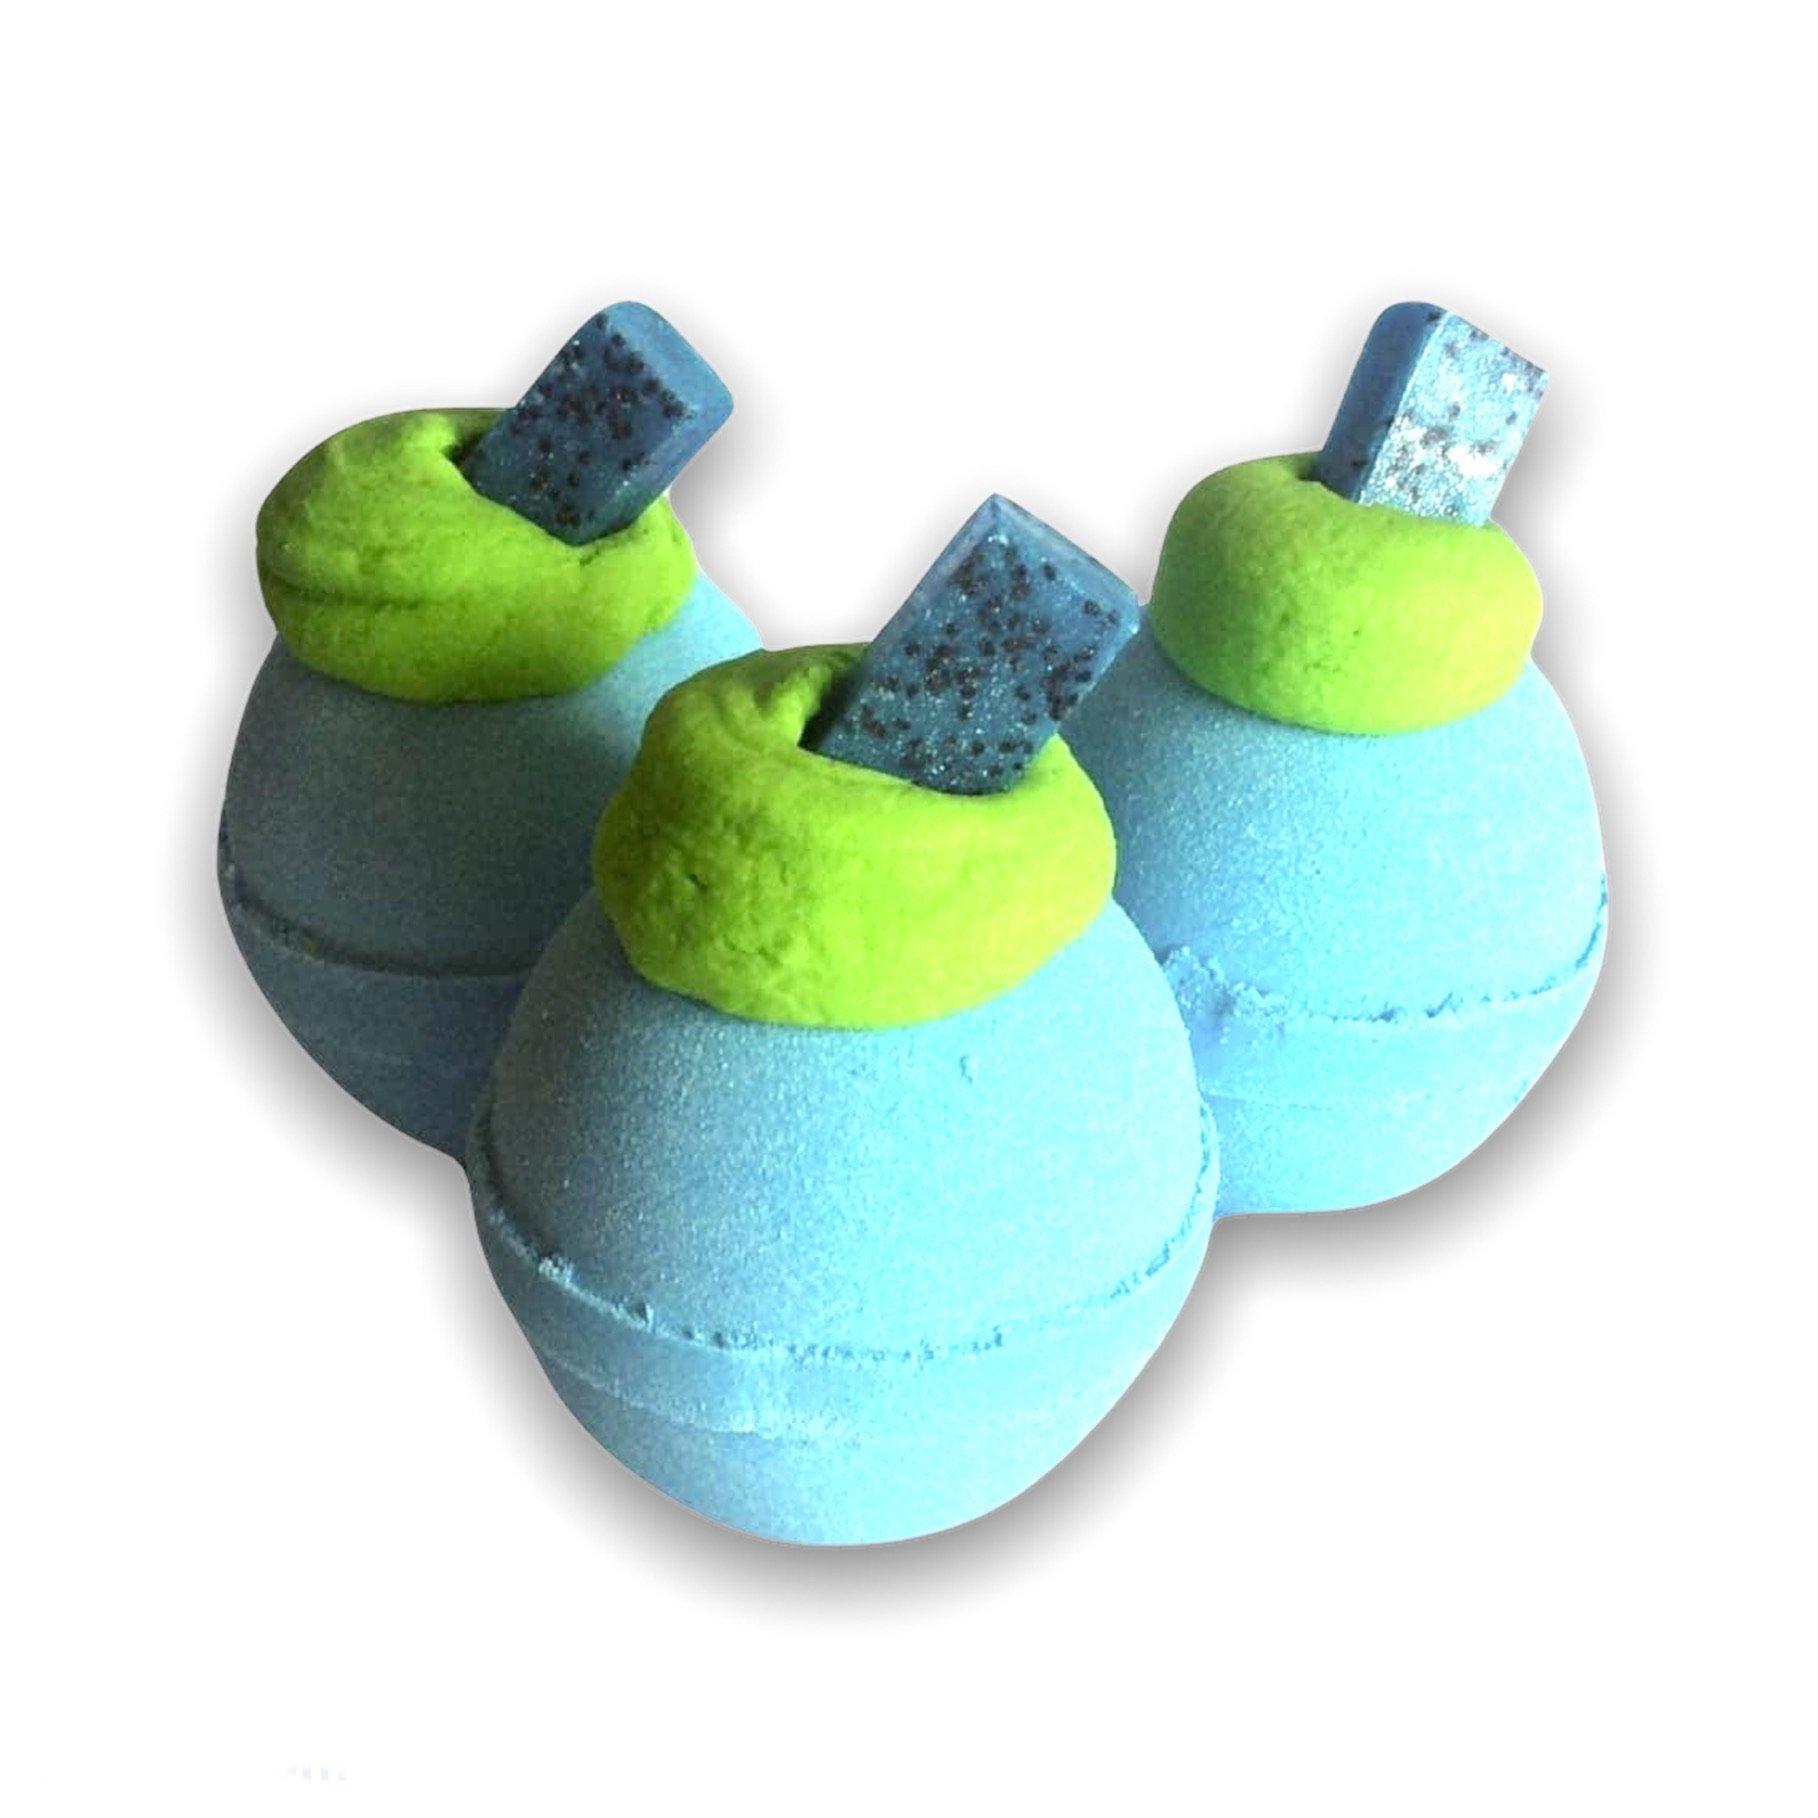 3 Blue Man bath bombs, including a blue embed,